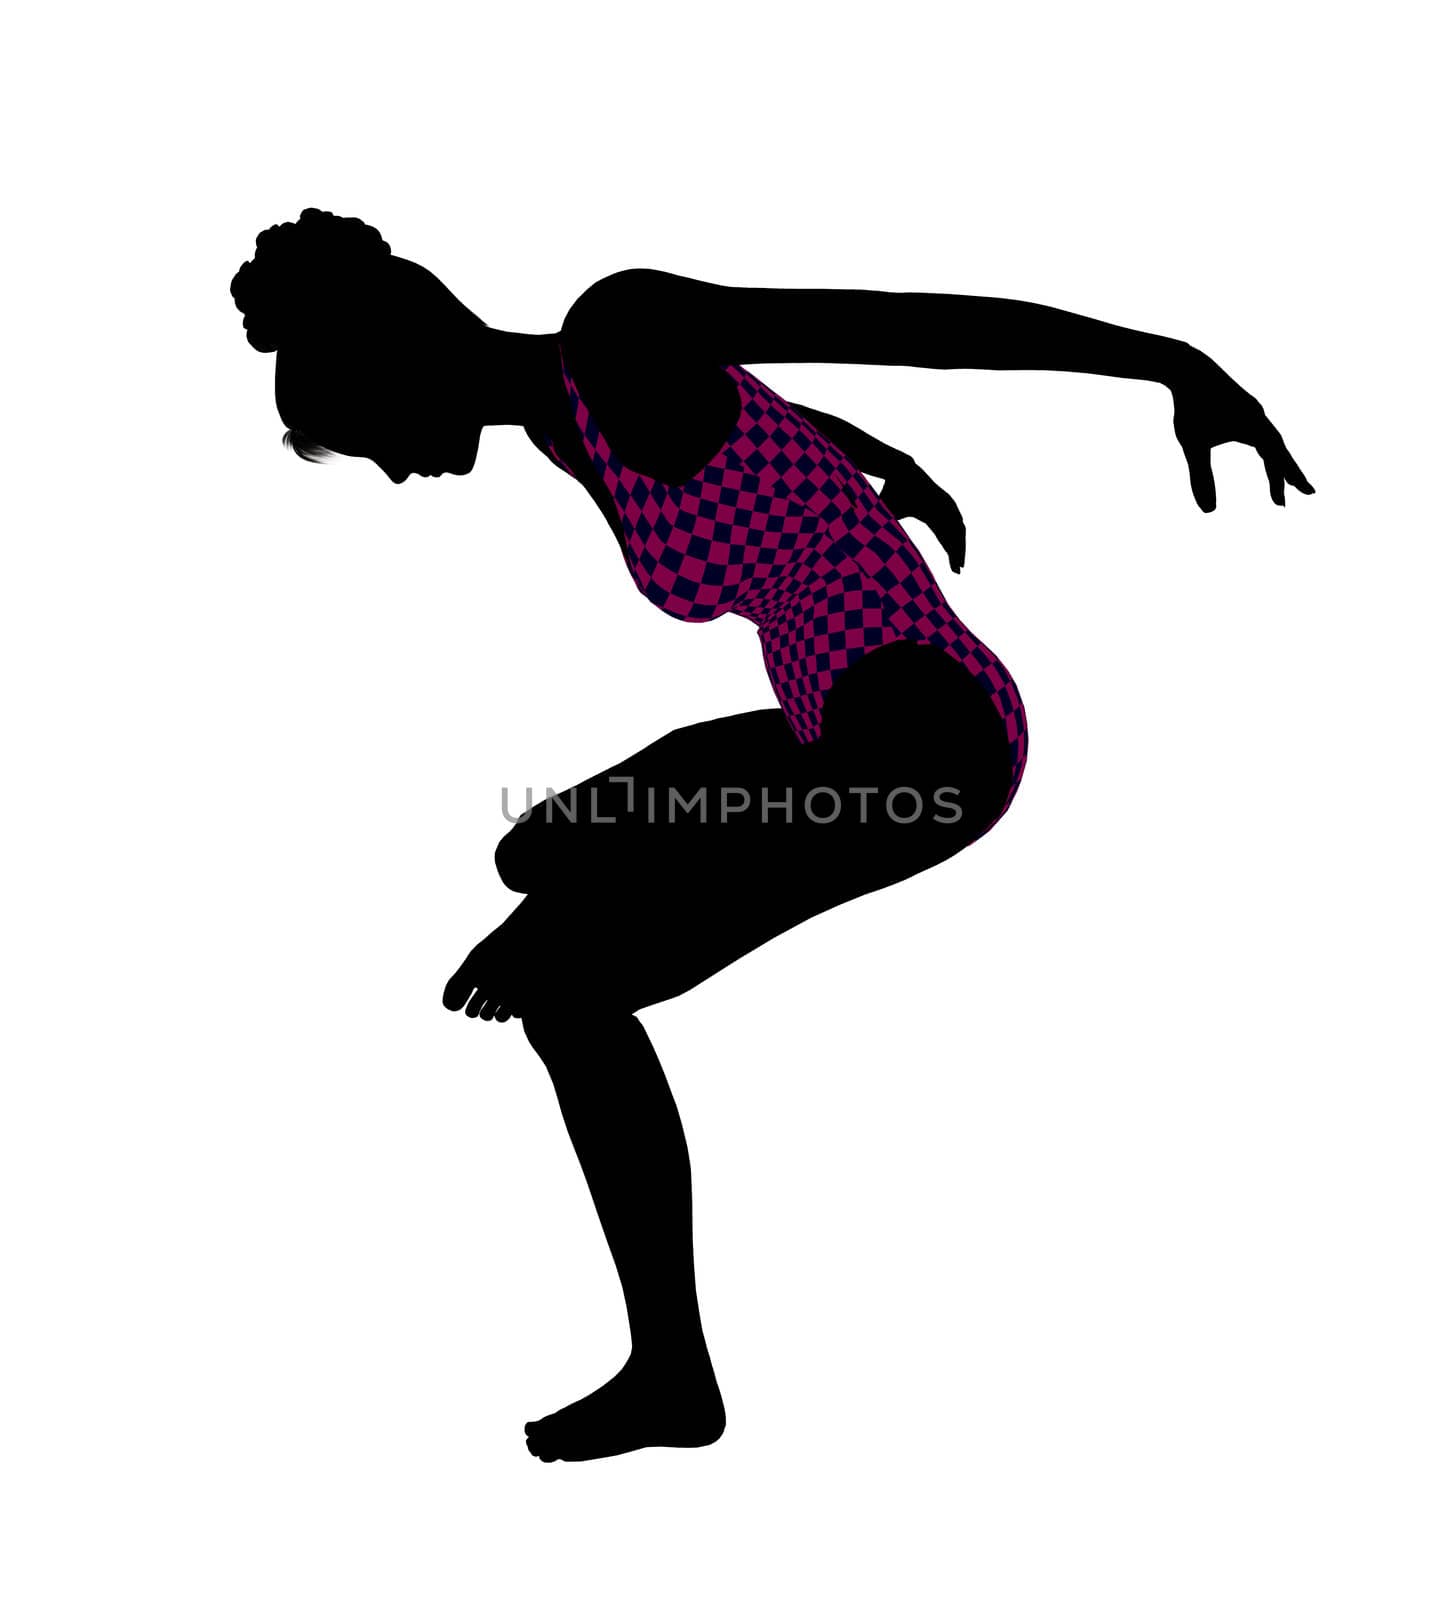 Female Yoga Illustration Silhouette by kathygold